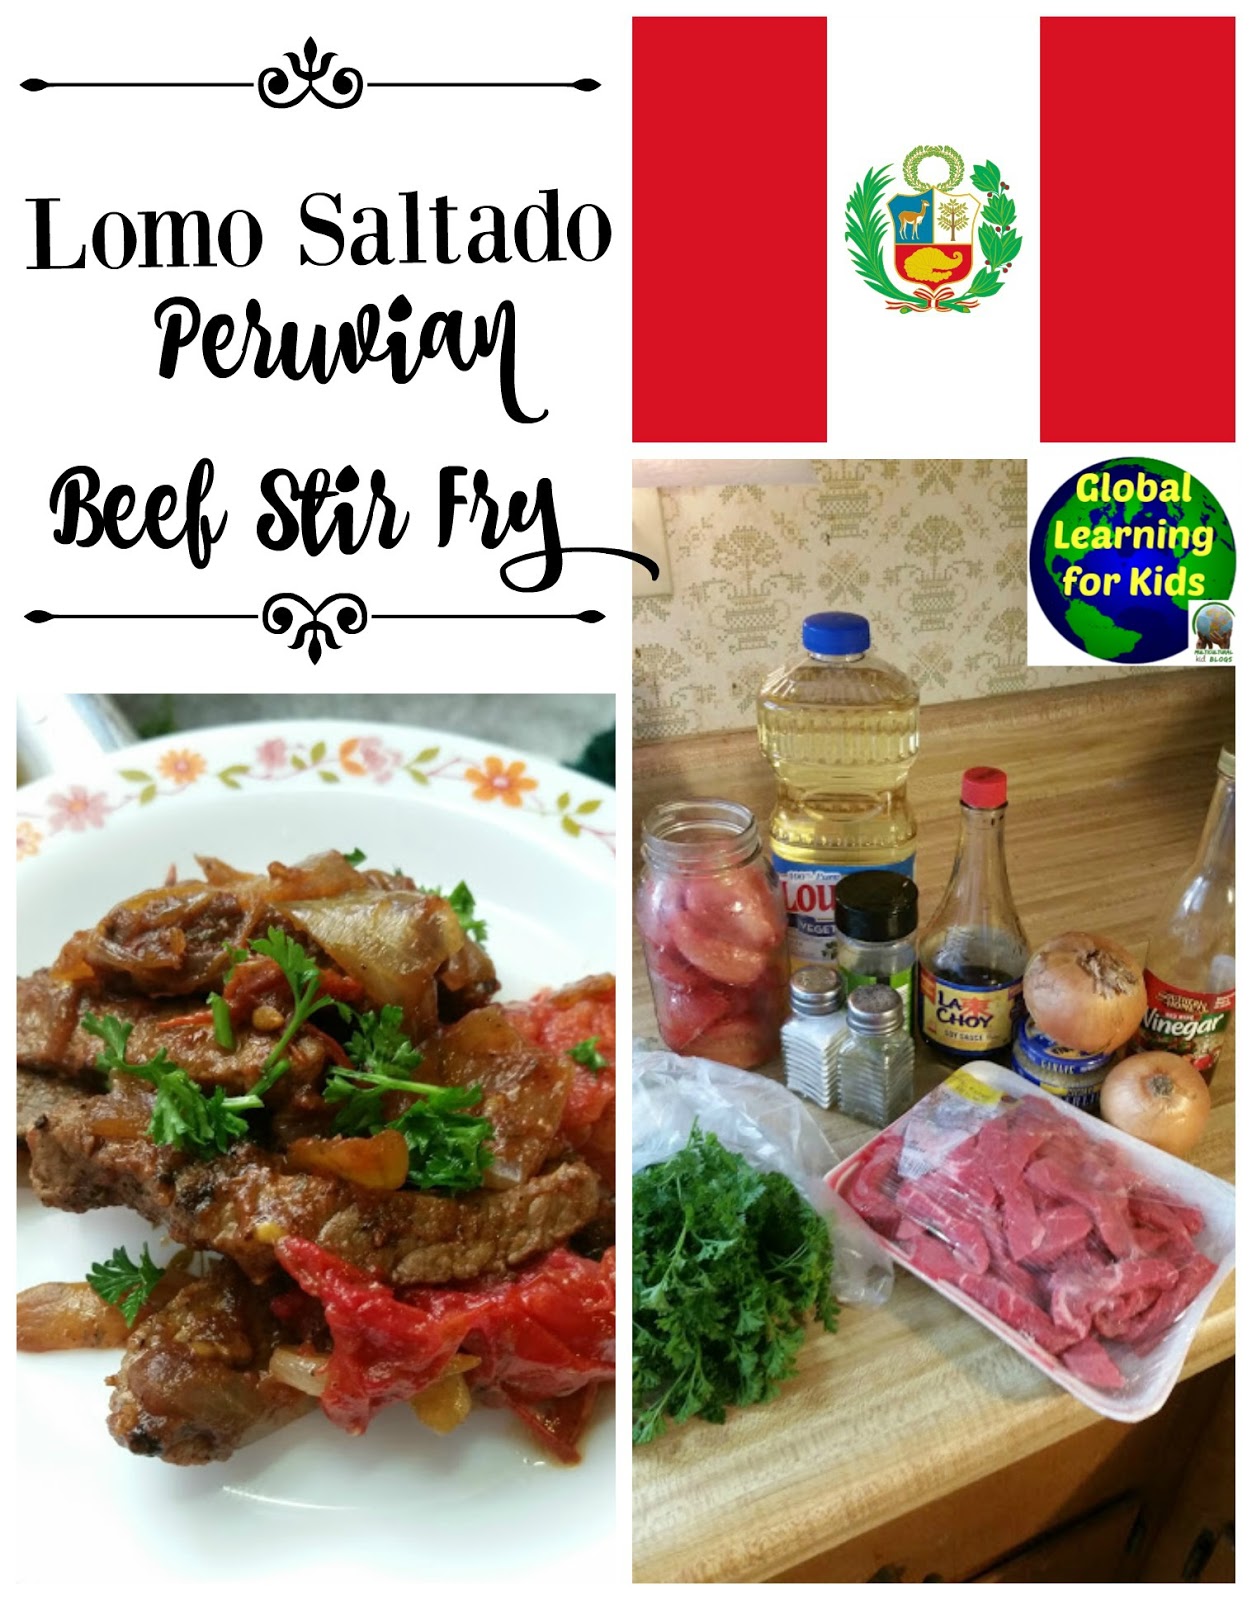 Lomo Saltado: Beef Stir Fry from Peru - All Done Monkey